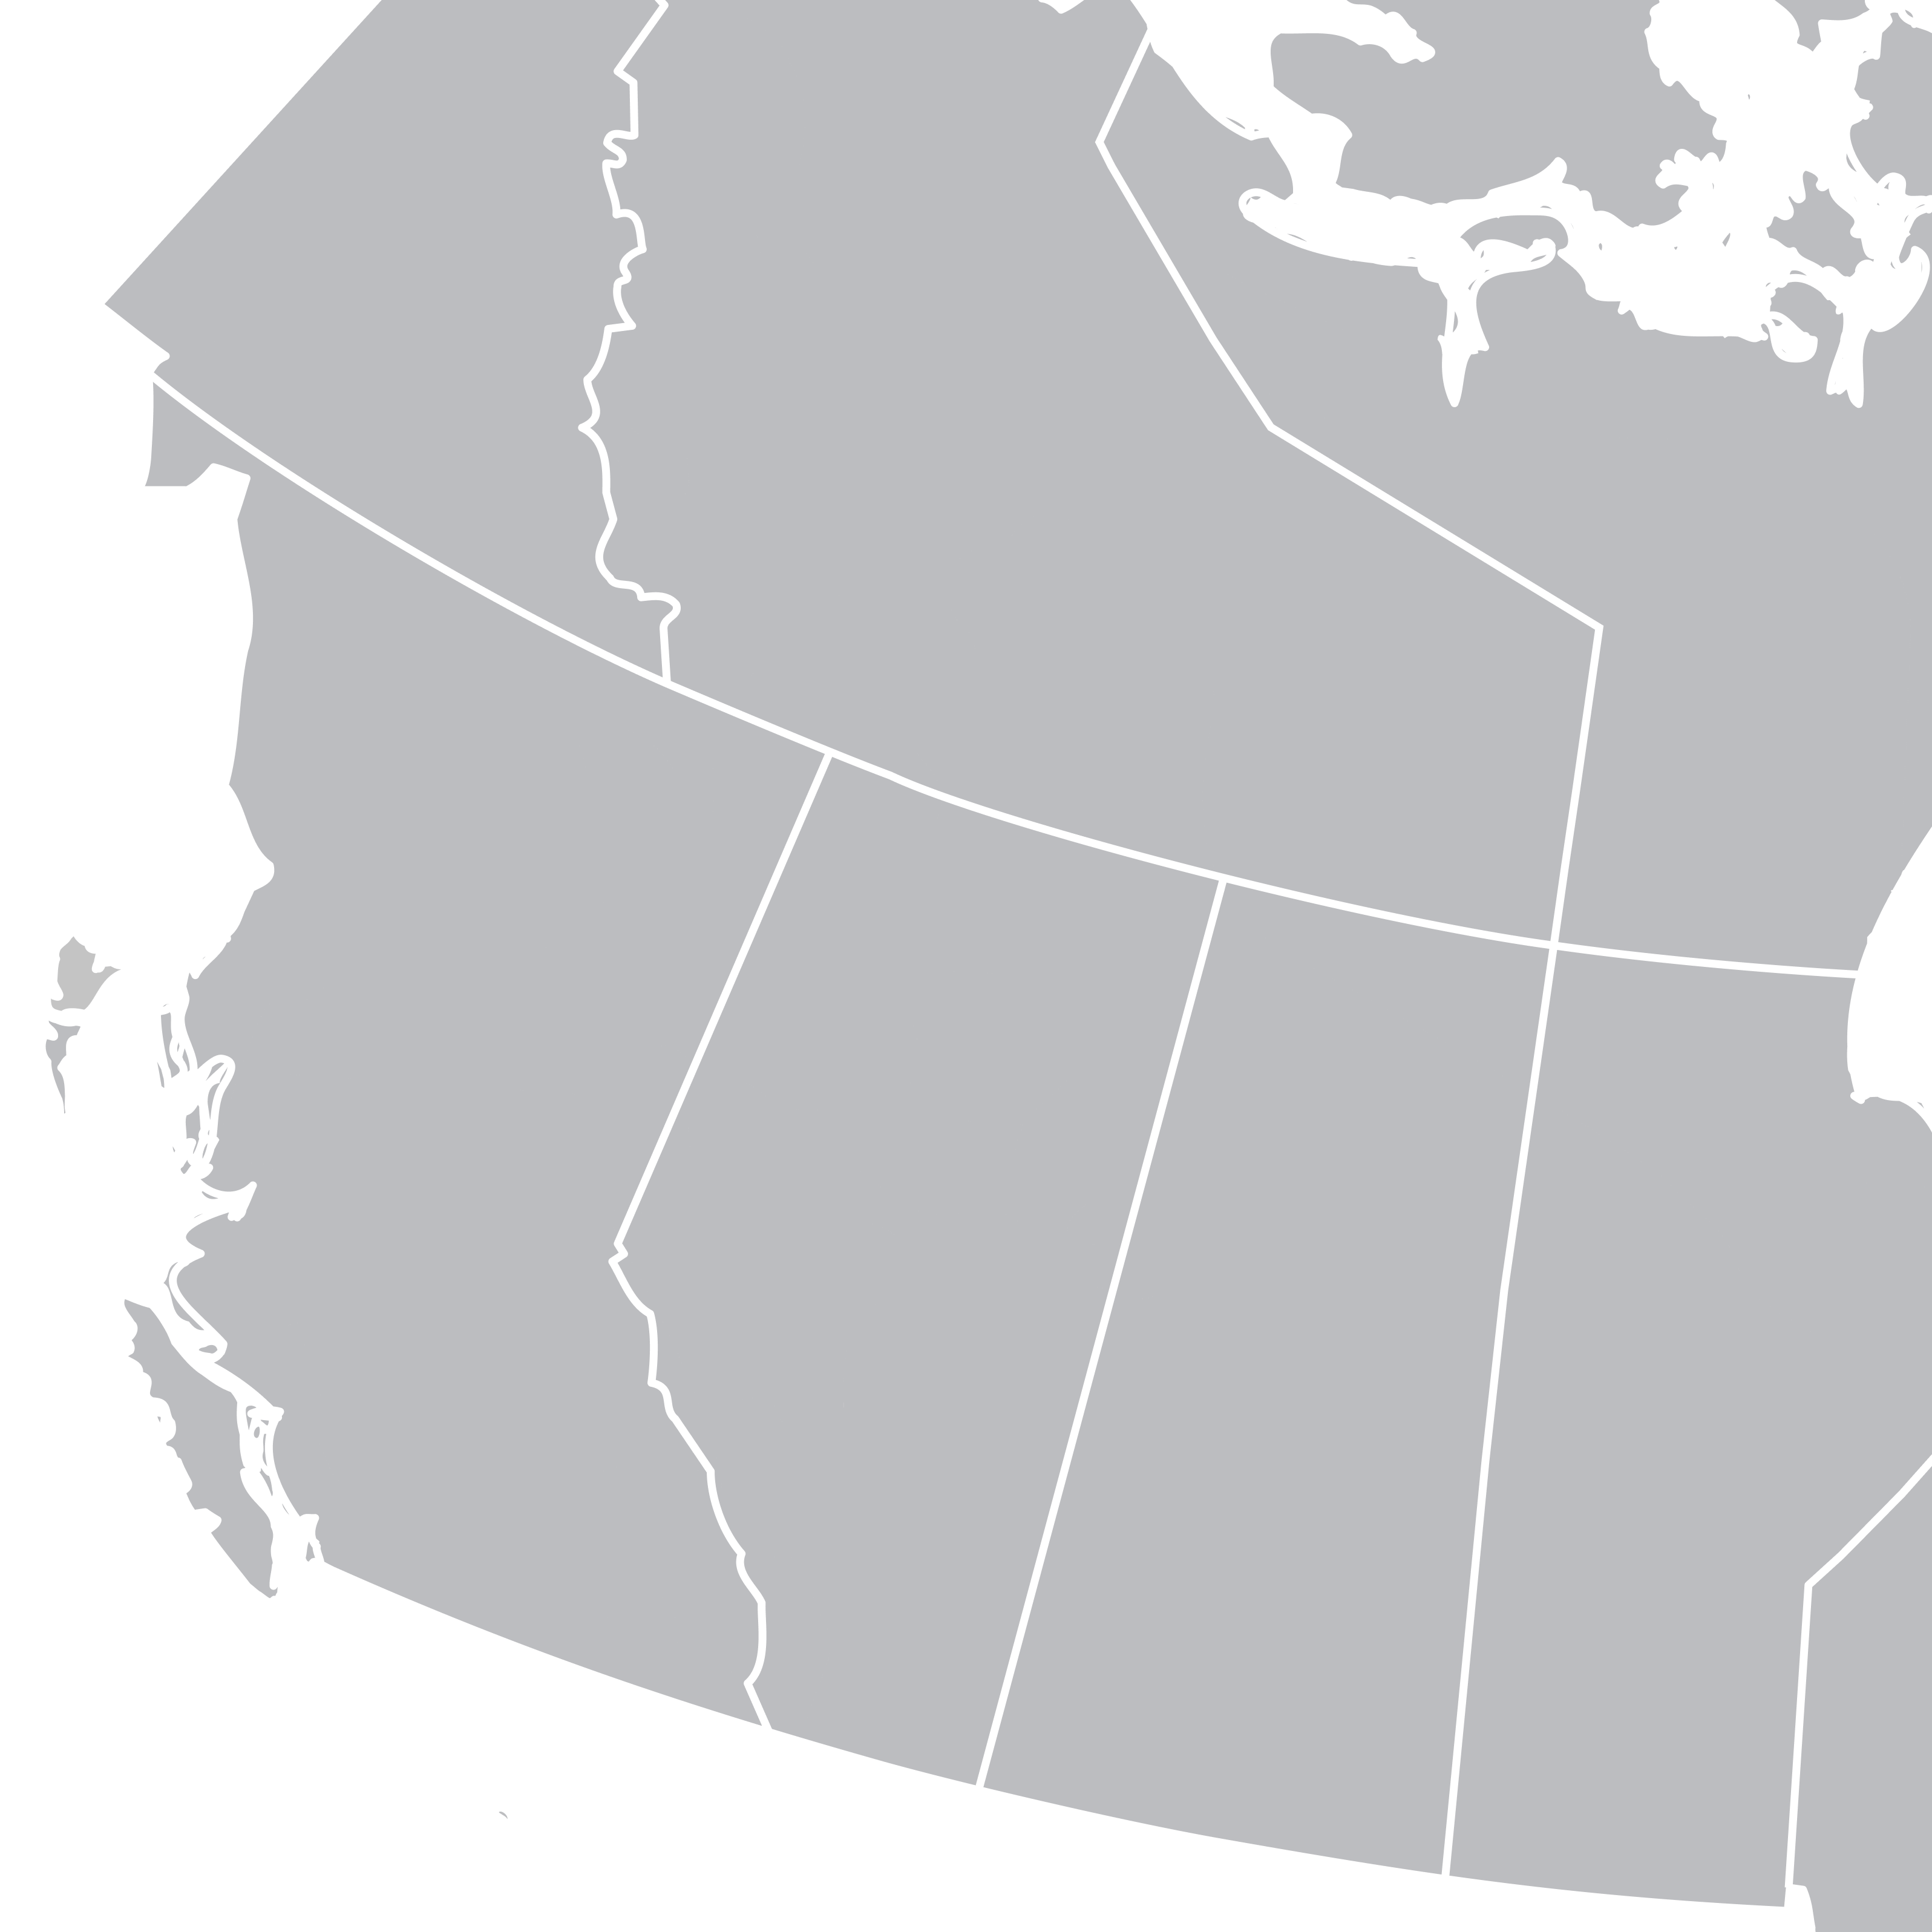 A map of Western Canada.